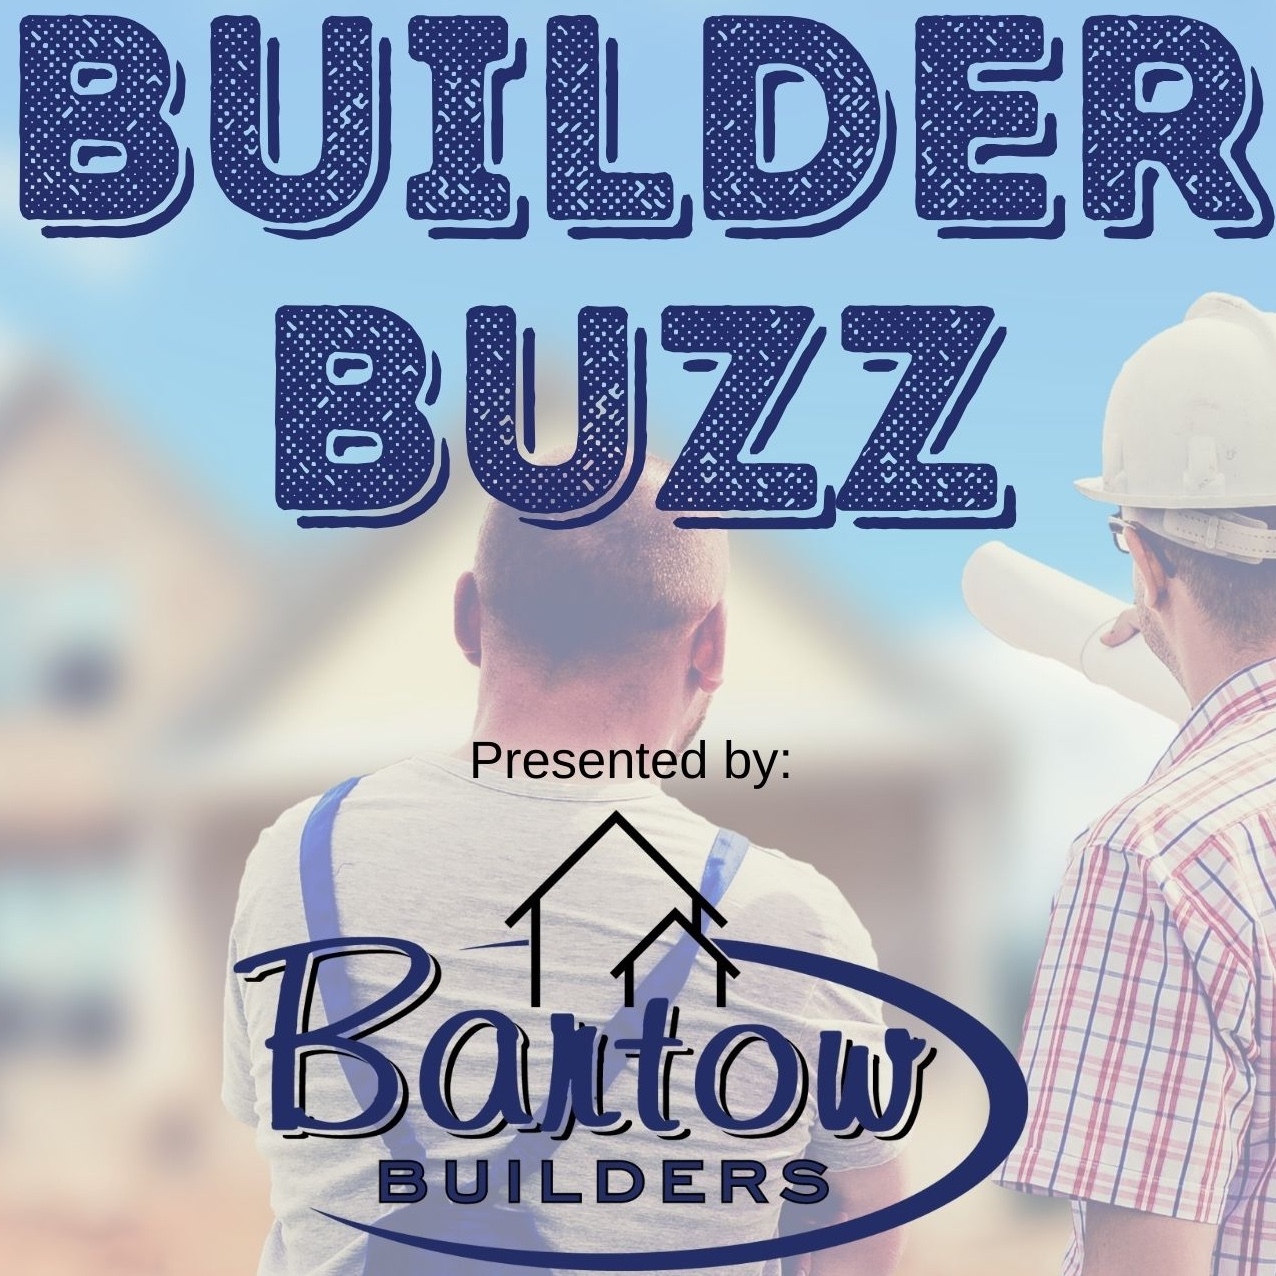 Builder Buzz